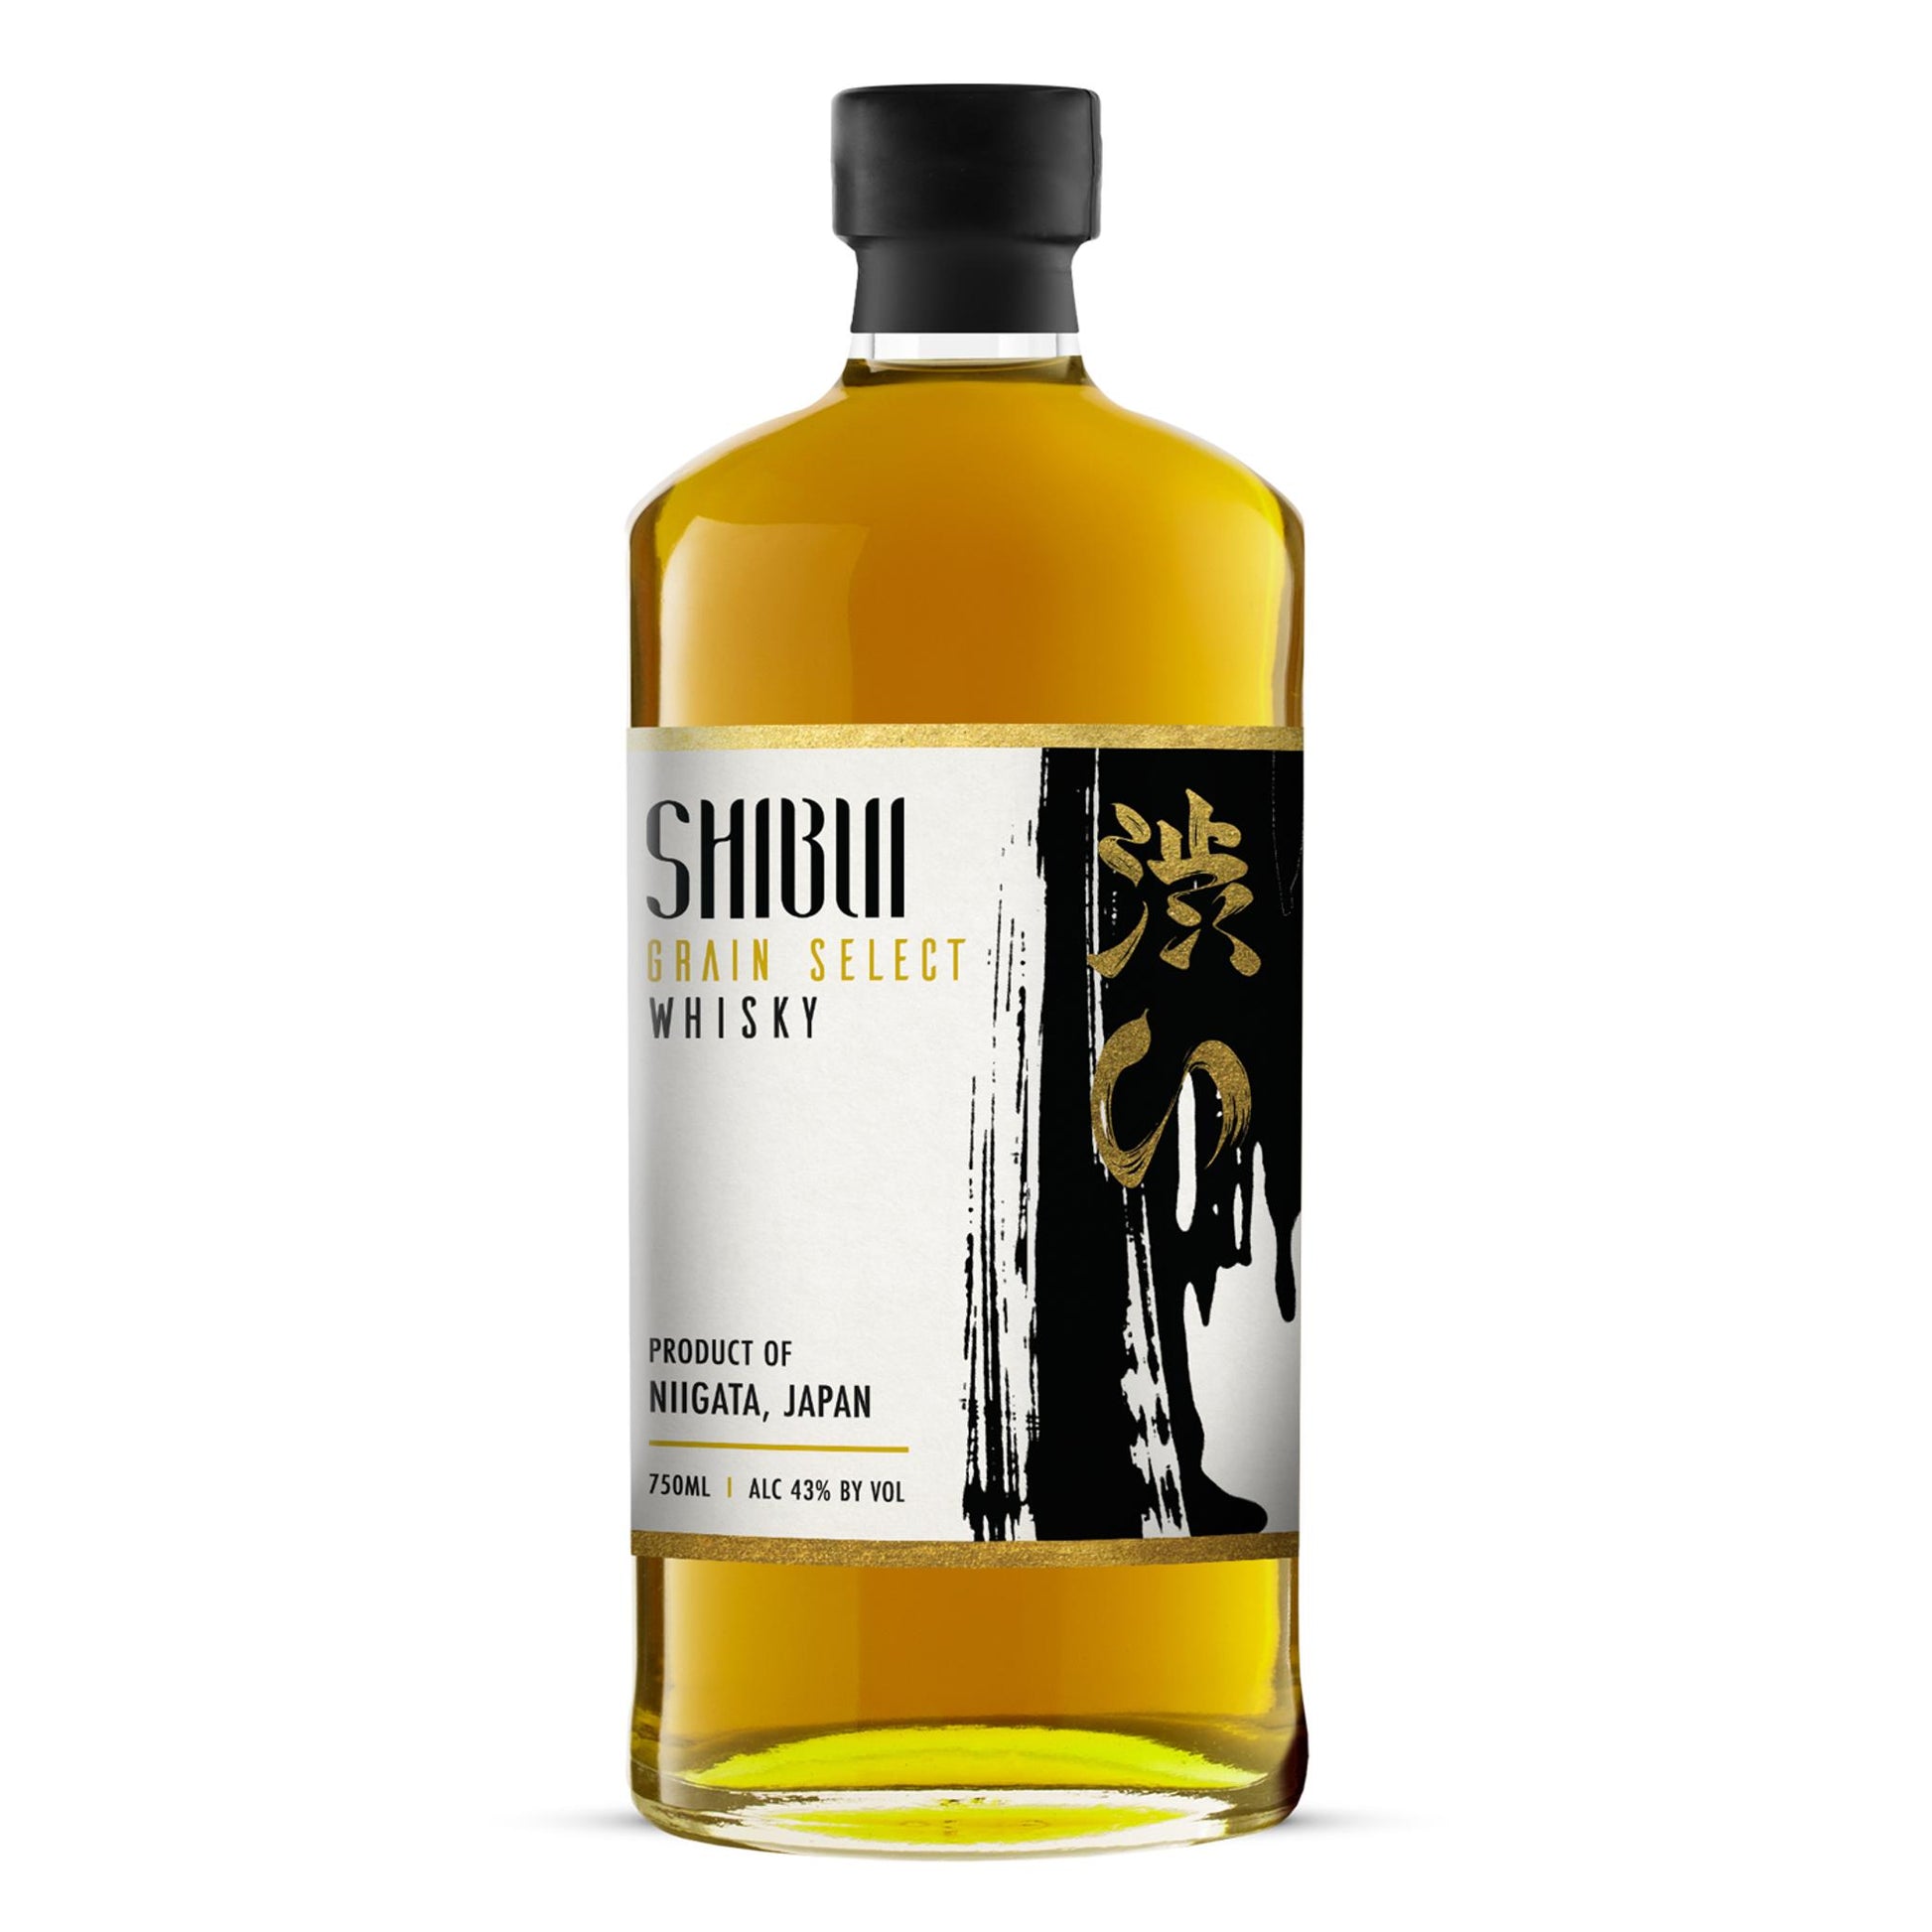 Shibui Grain Select Whisky - Liquor Geeks